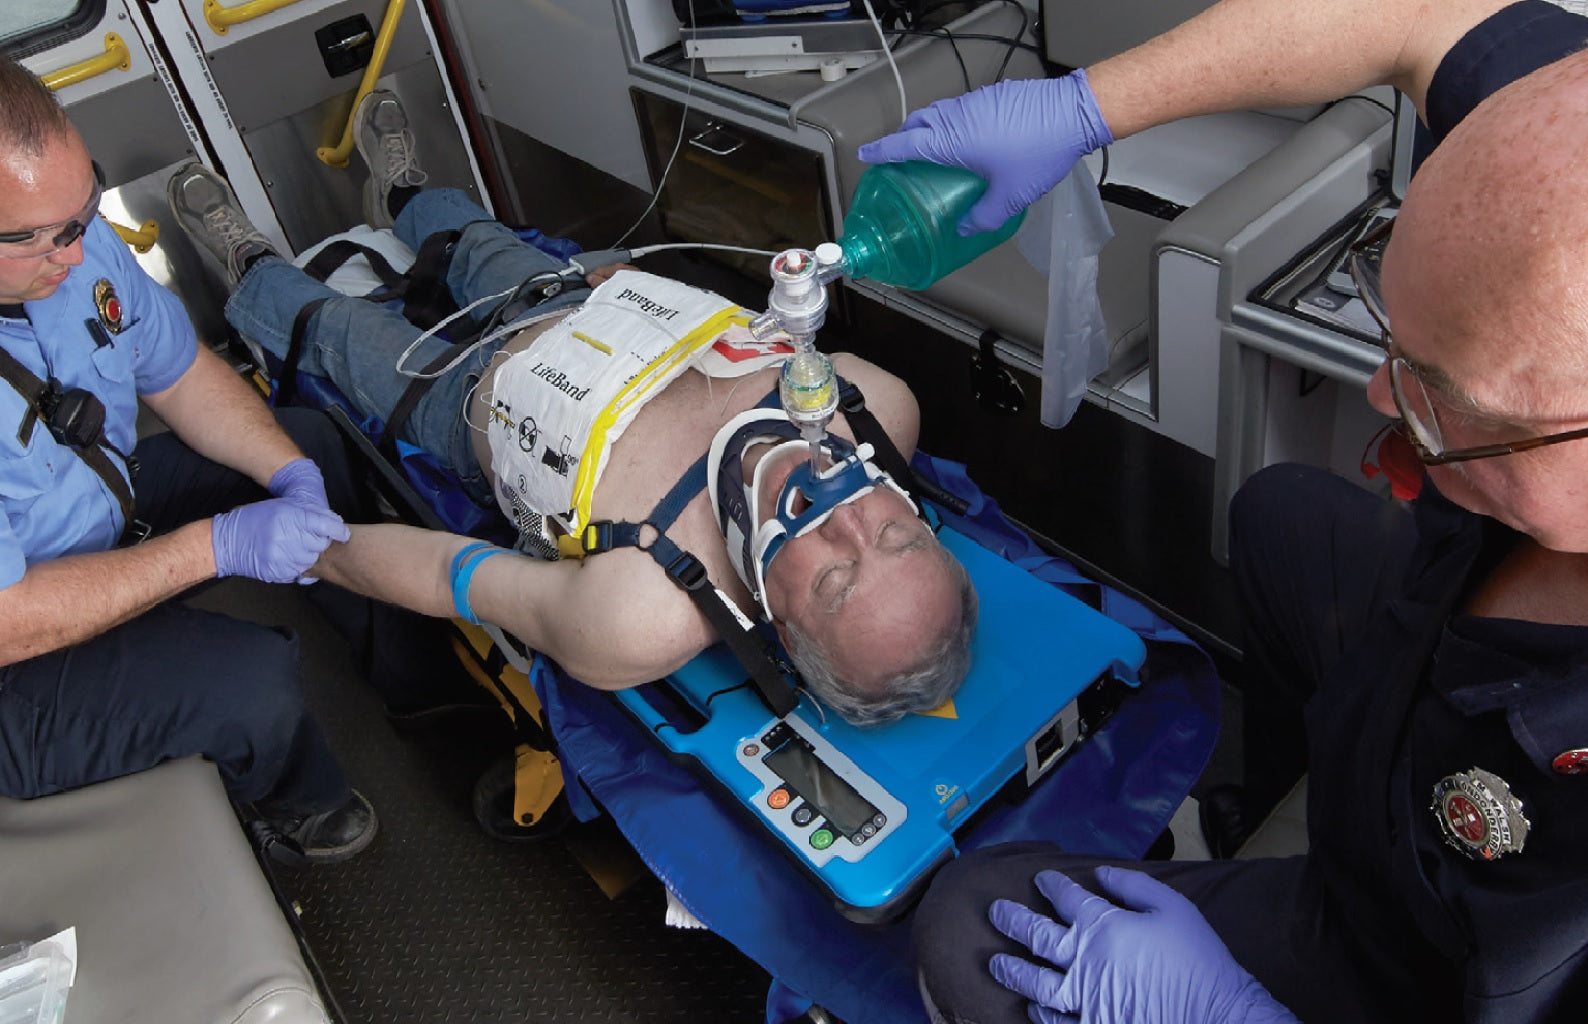 Zoll AutoPulse Resuscitation System